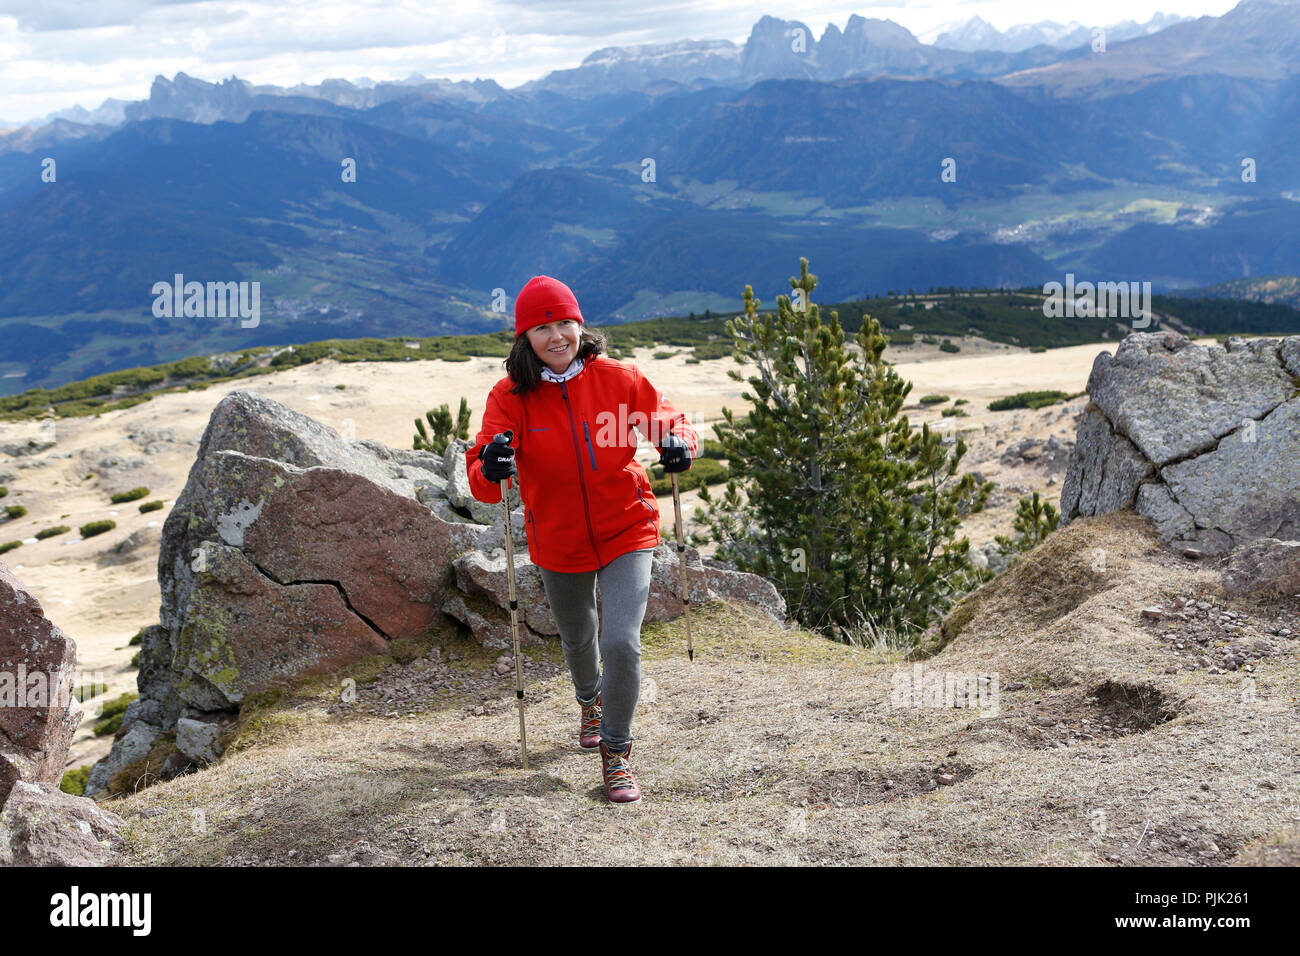 a woman hiking, Nordic walking Stock Photo